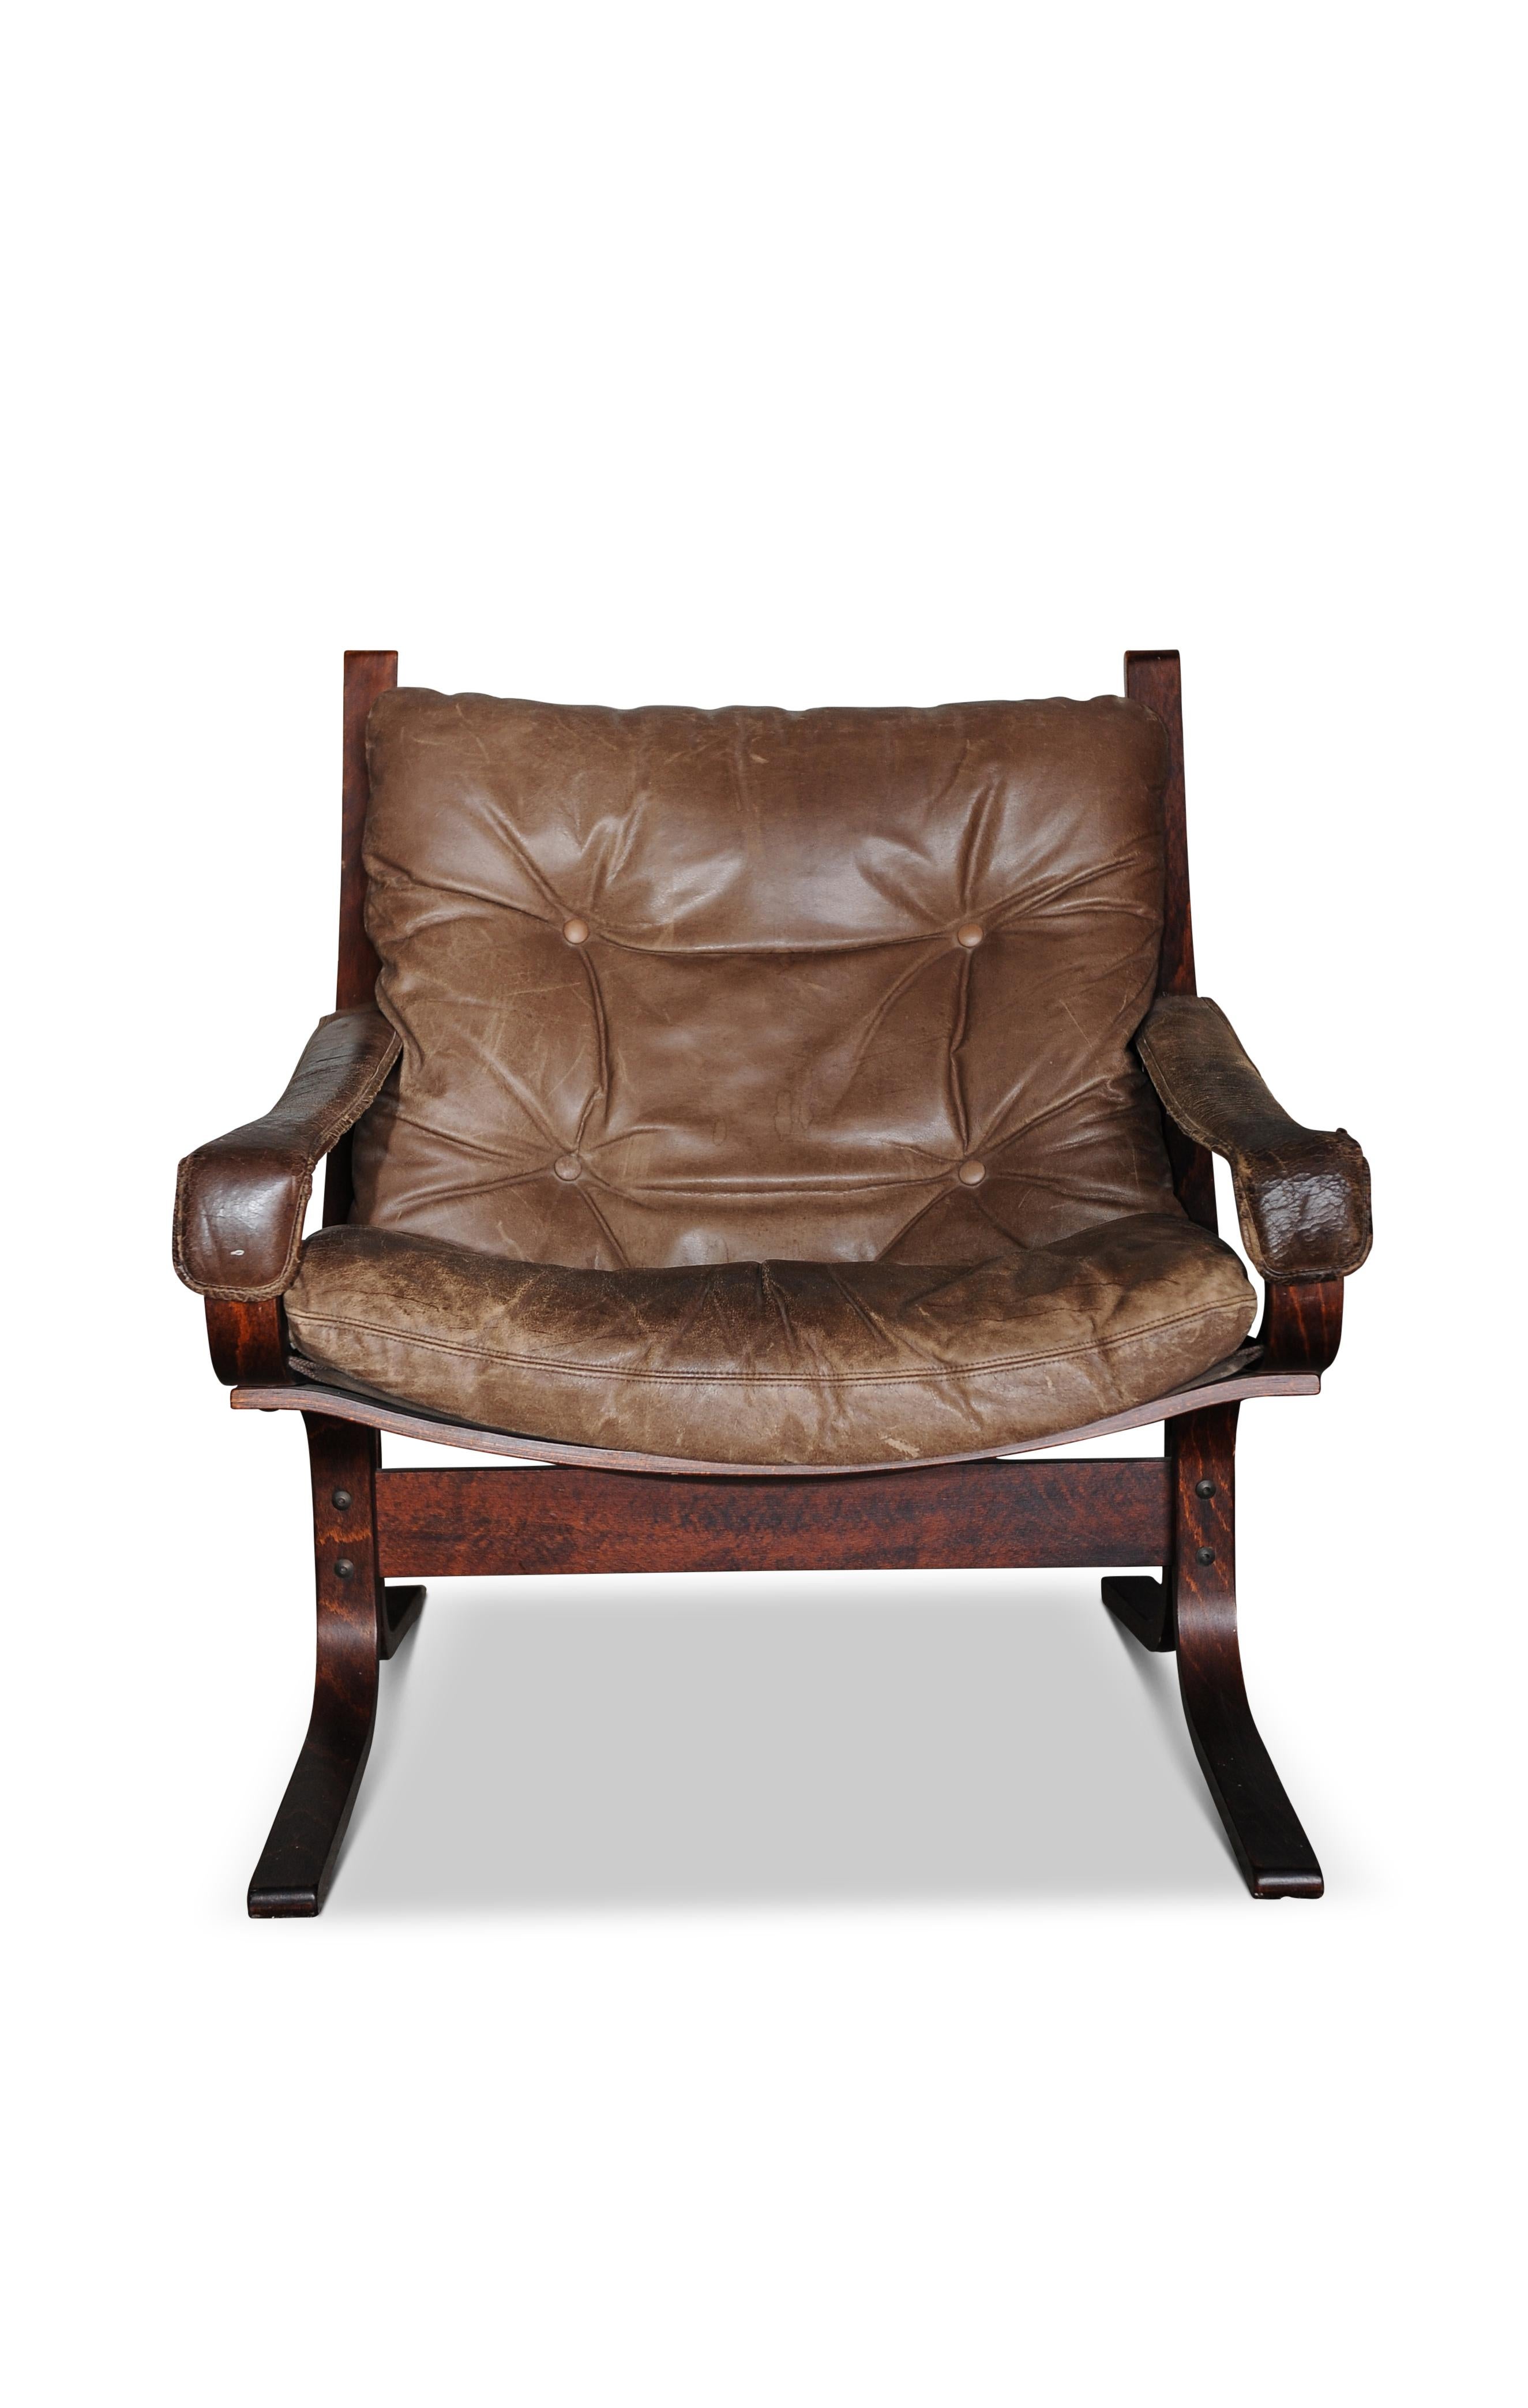 Scandinavian Mid-Century Modern, A brown leather Westnofa Siesta lounge chairs by Ingmar Relling, 1960s.

A Scandinavian Mid-Century Modern, dark brown leather, 